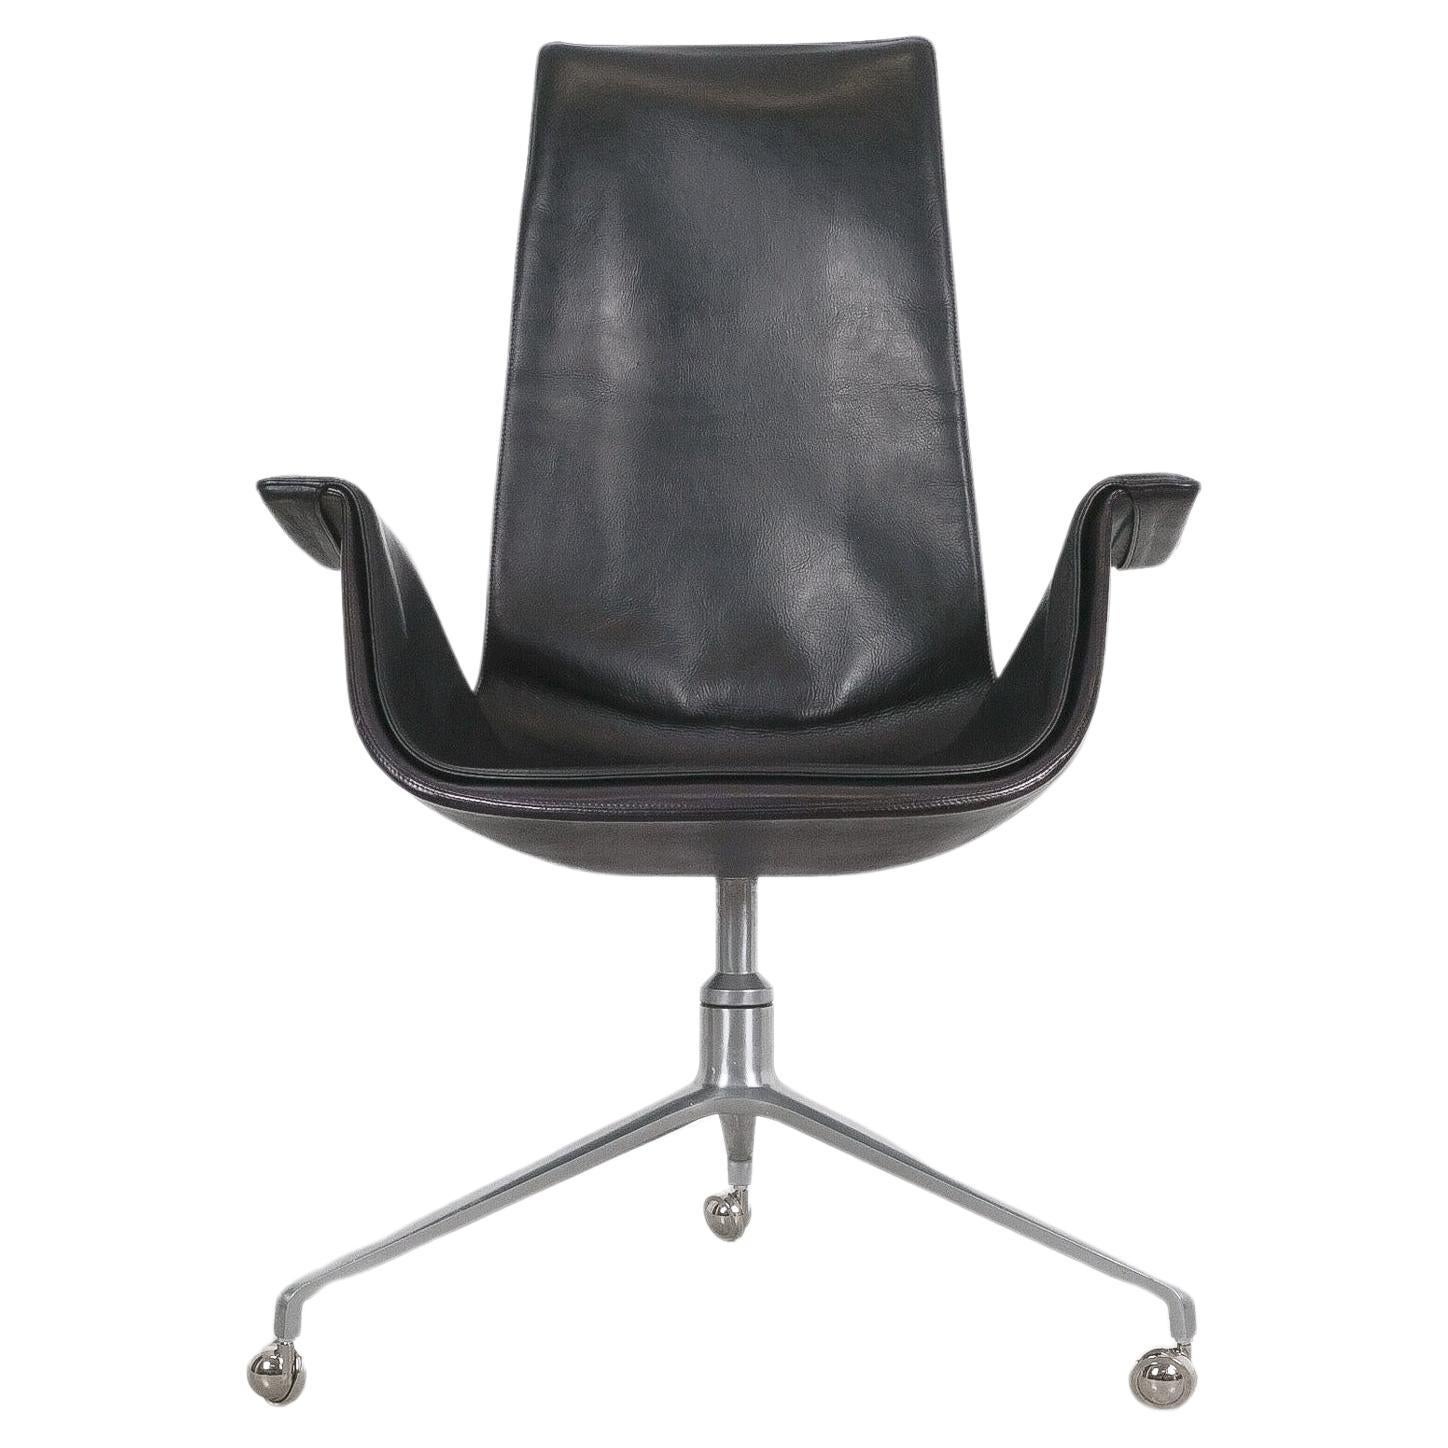 Fabricius and Kastholm Black High Back Bird Desk Chair Swivel Base FK 6725, 1964 For Sale